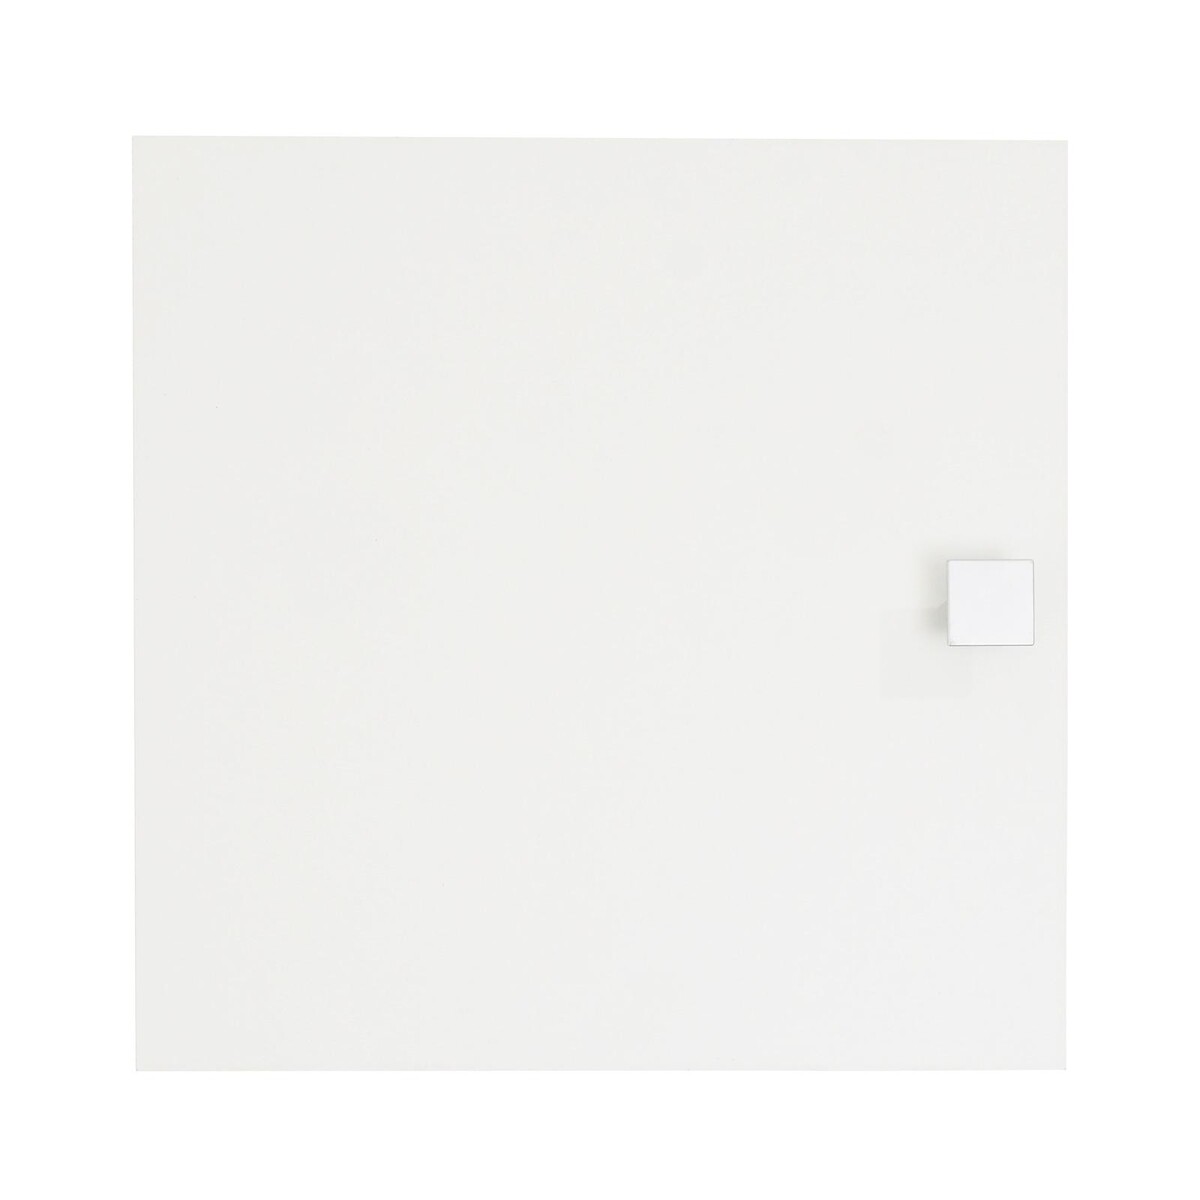 Фасад для системы хранения dice cube, 324х324х16, белый